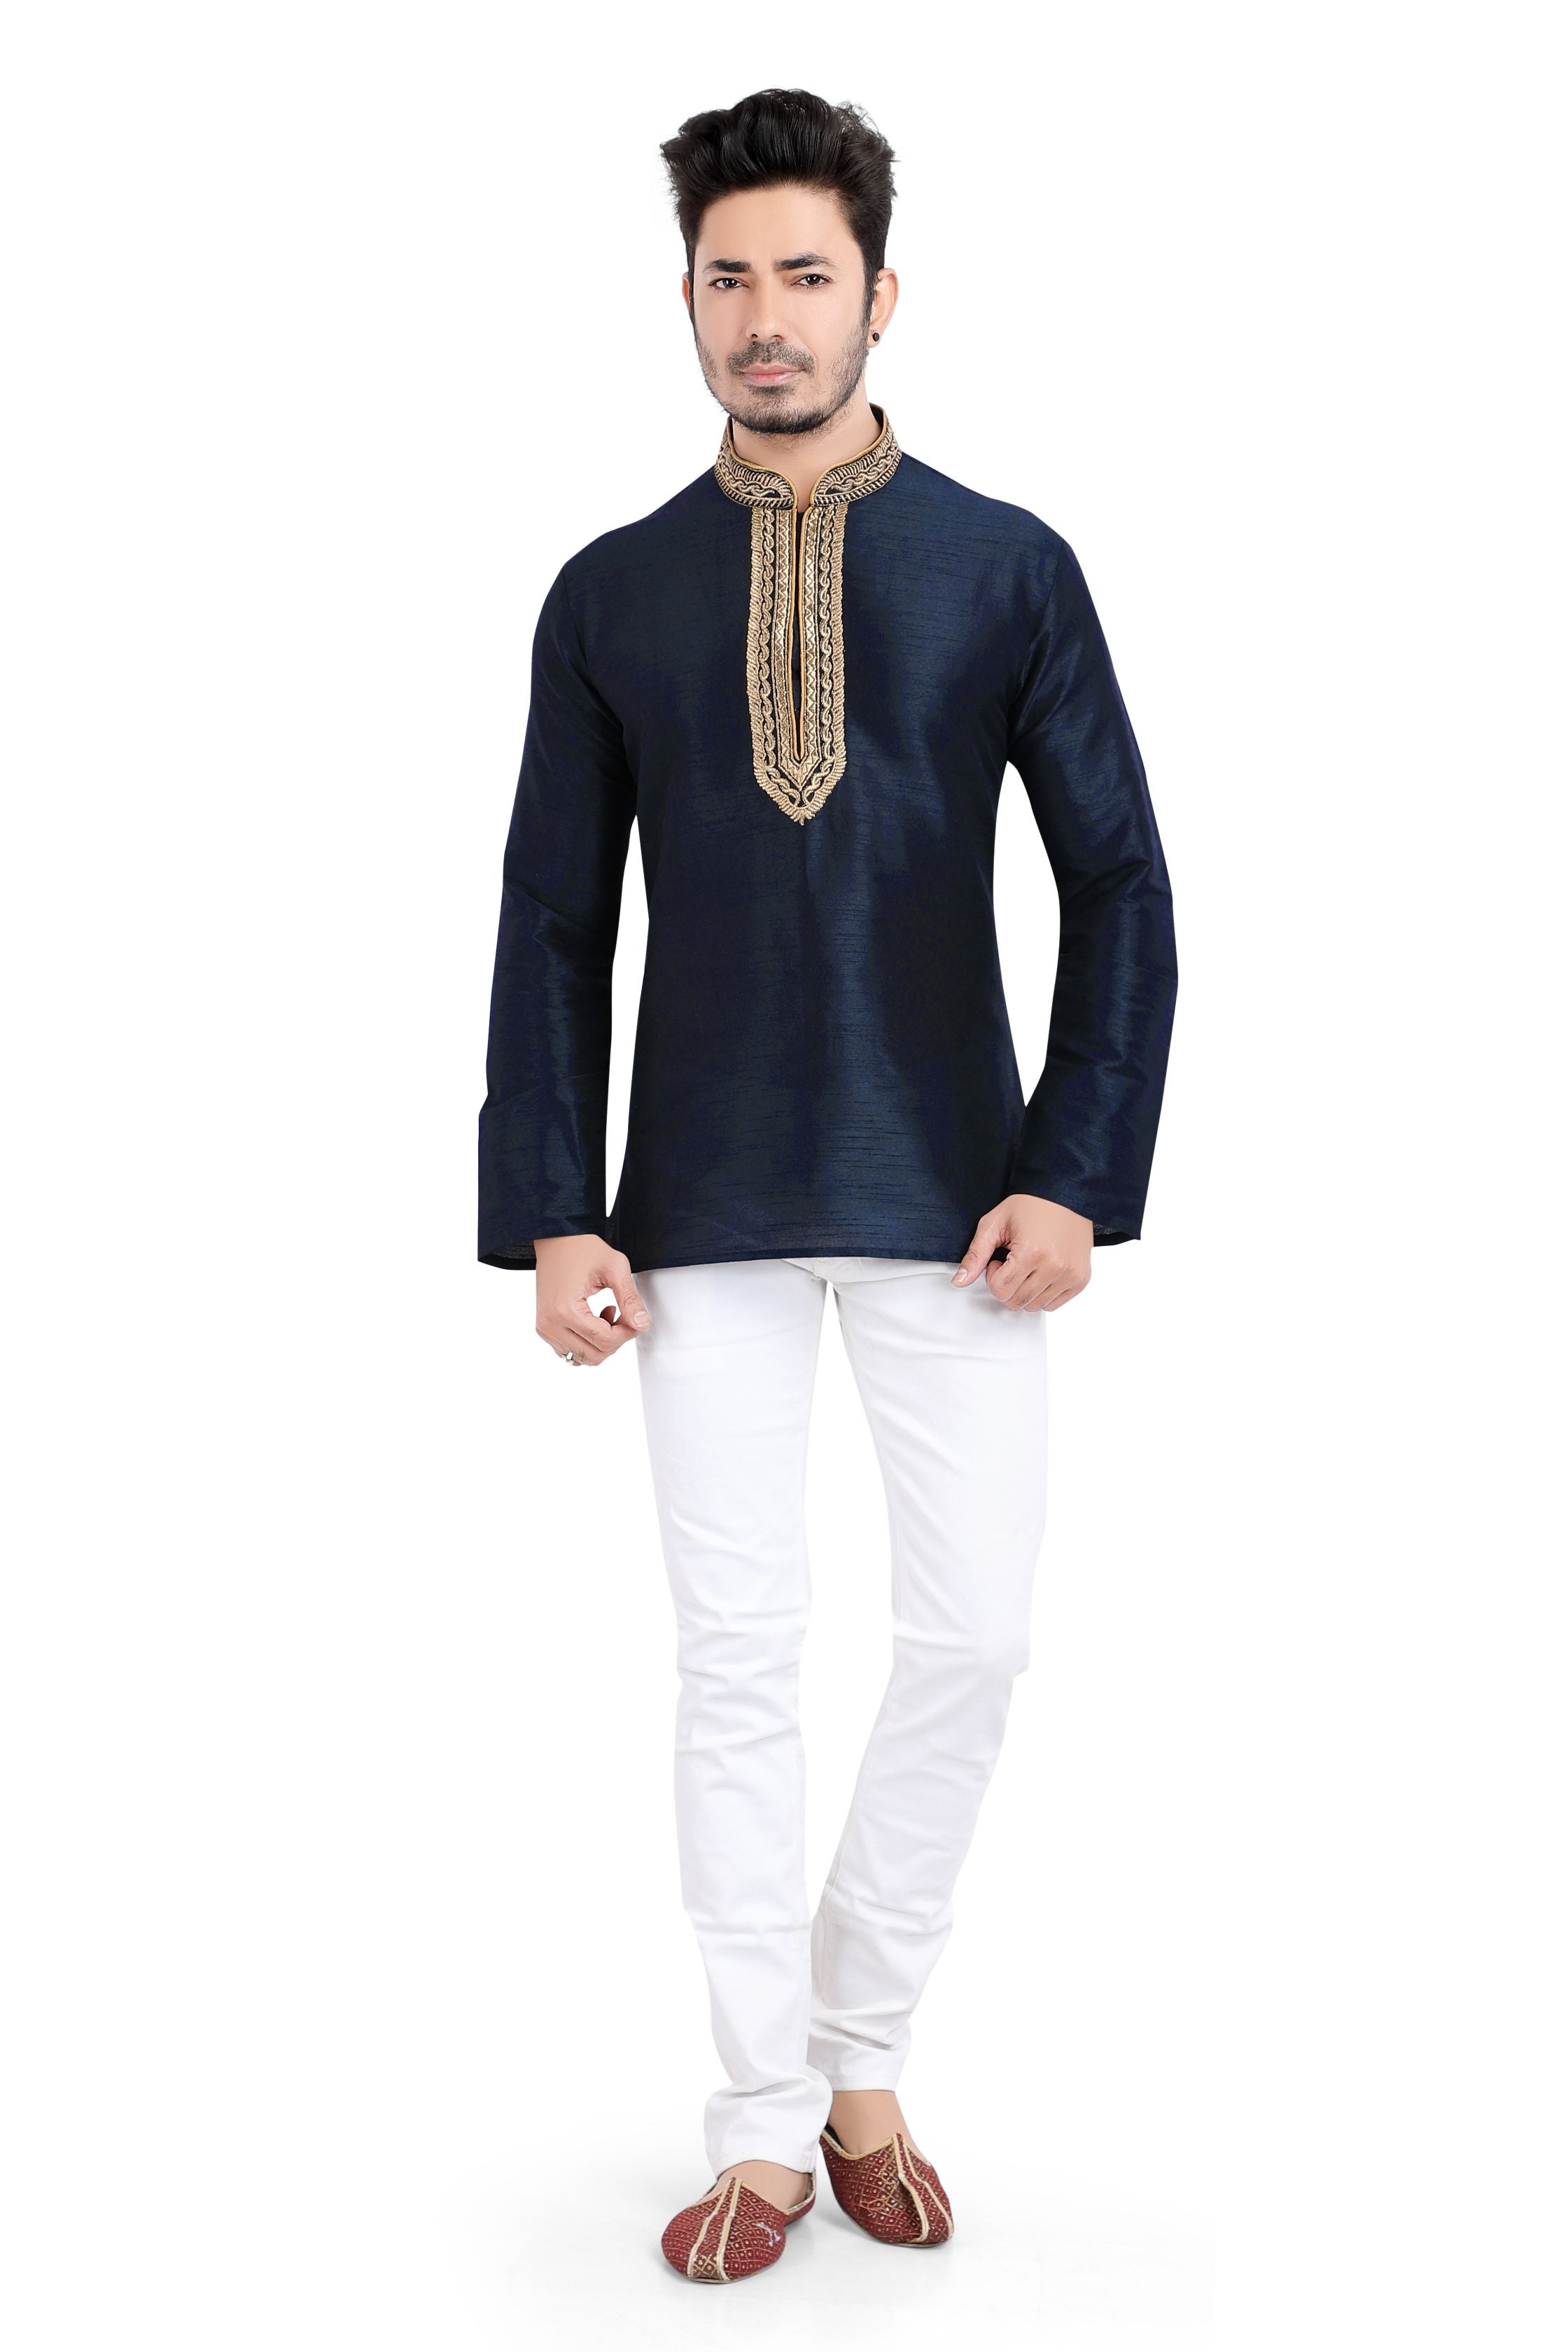 Banarasi Dupion Silk Short Kurta with embroidery in Navy Blue color - Premium kurta pajama from Dapper Ethnic - Just $49! Shop now at Dulhan Exclusives